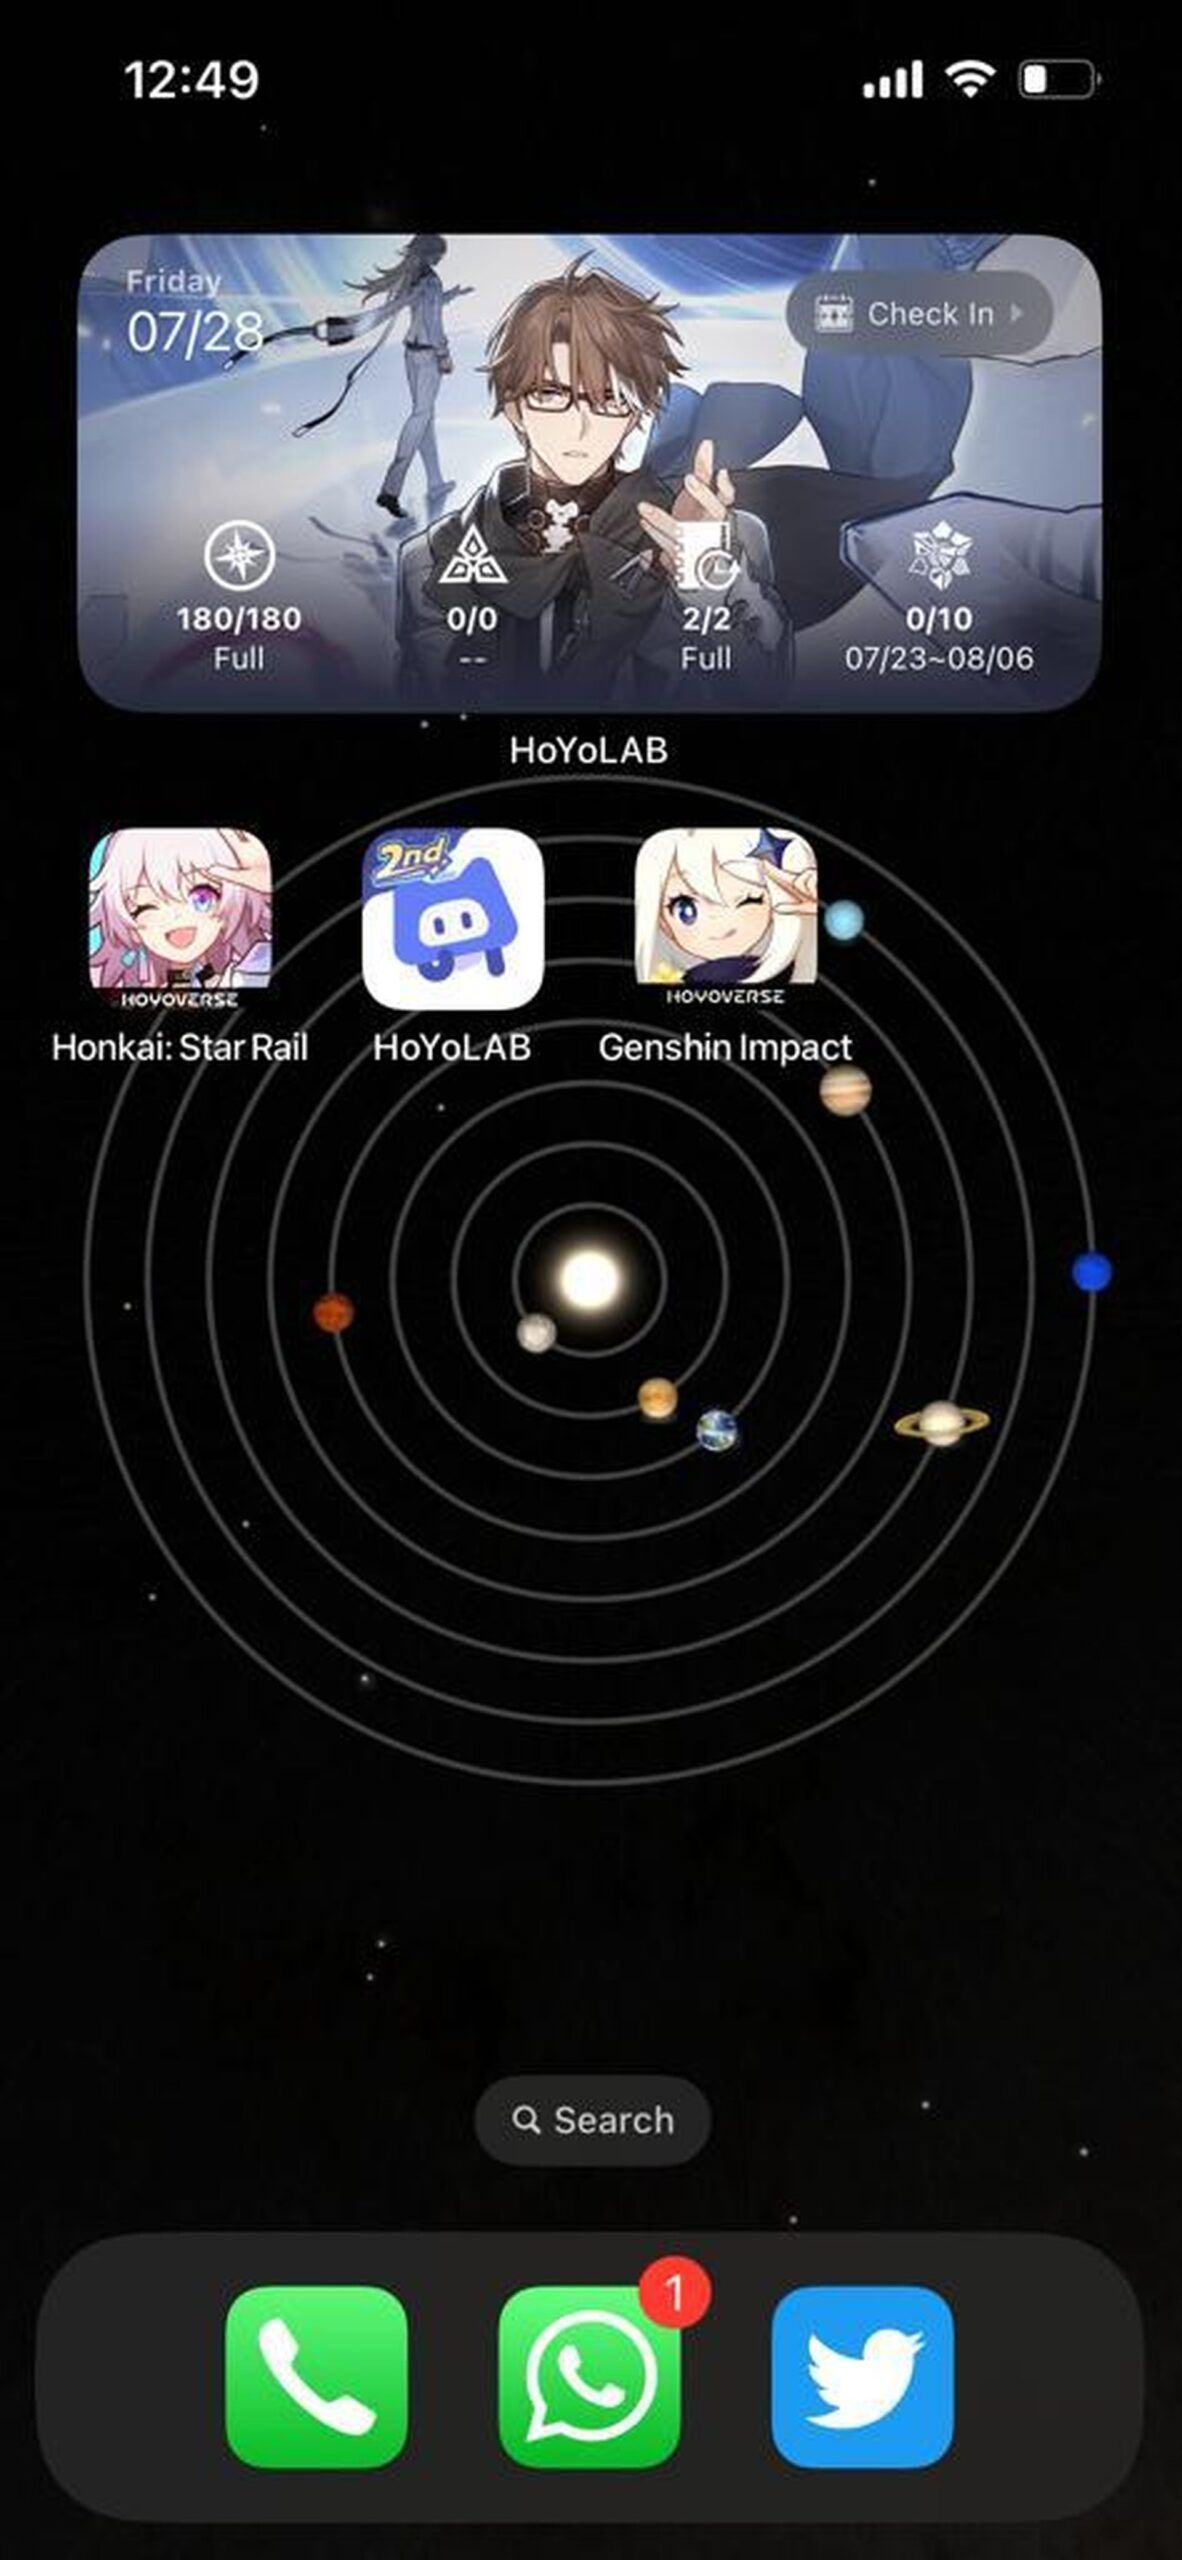 How to get the HoYoLAB widget for Honkai: Star Rail